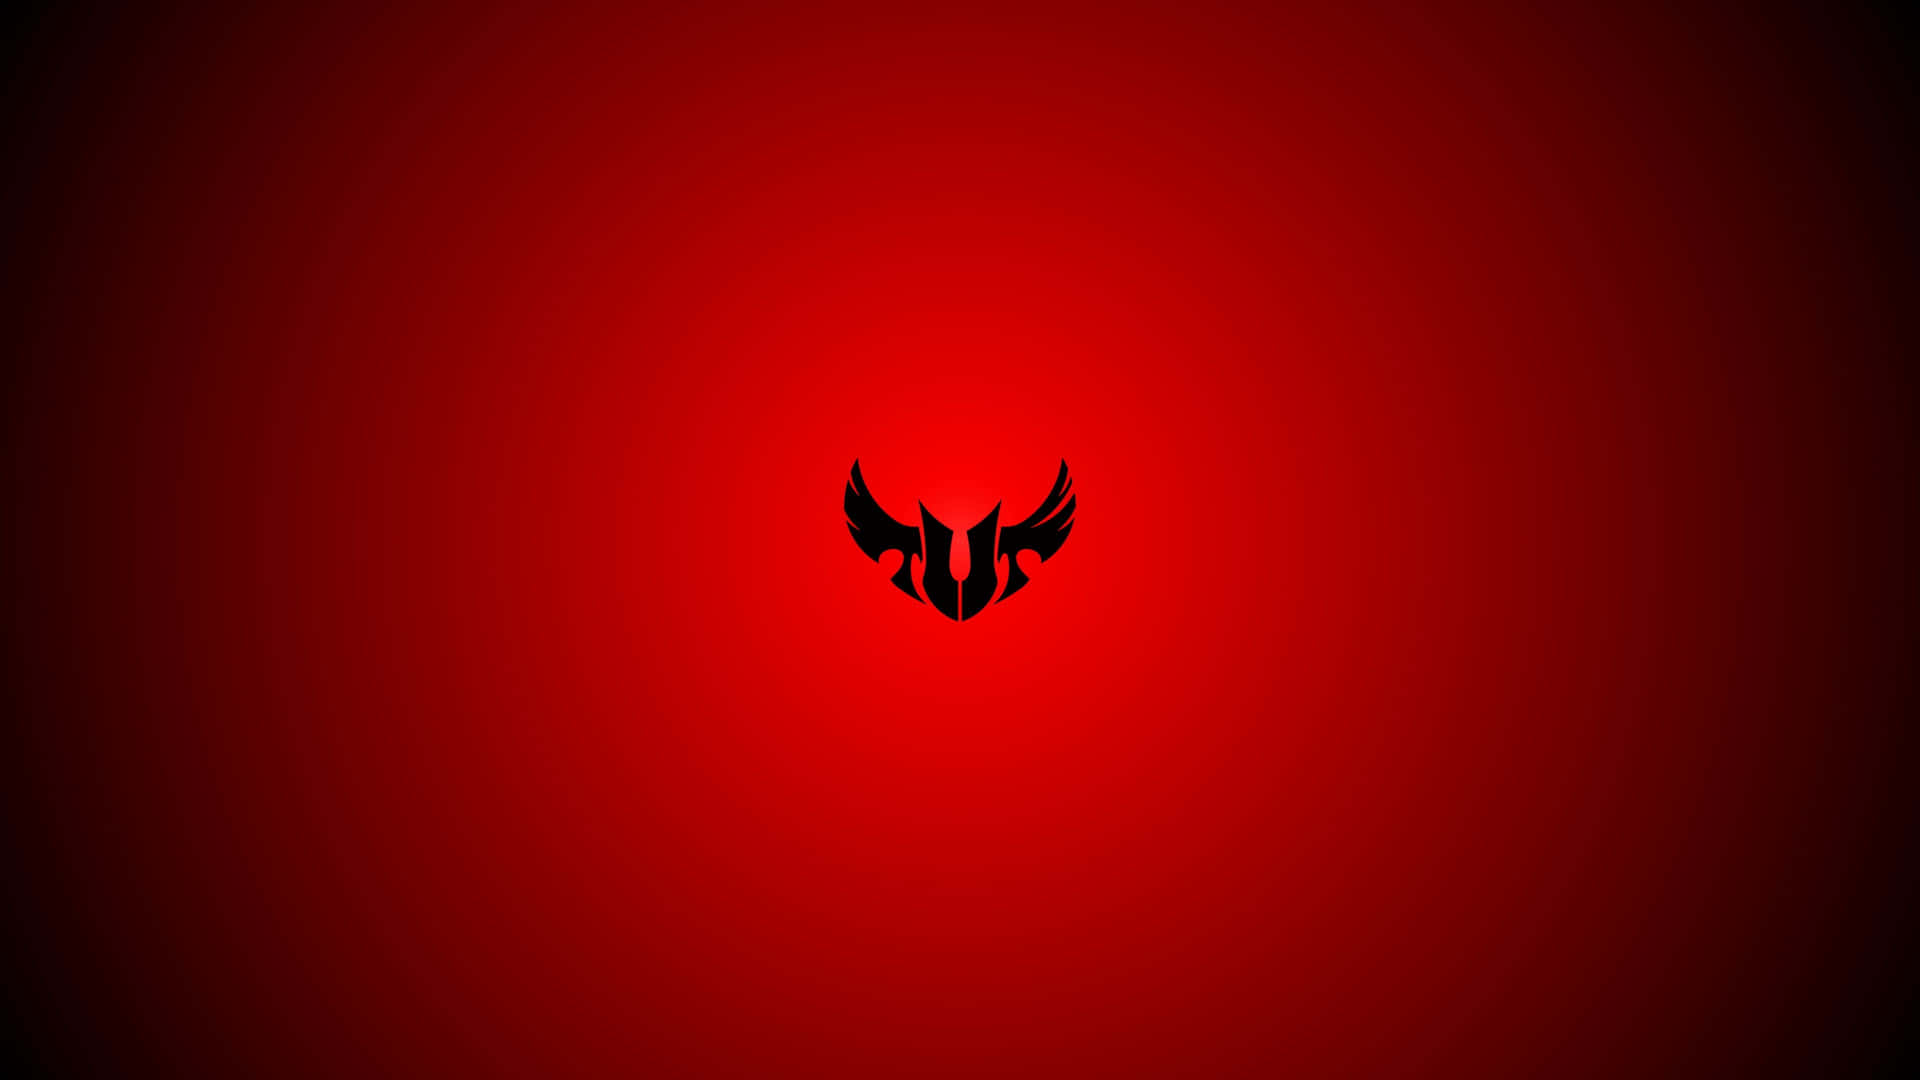 Asus T U F Gaming Logo Red Background Background